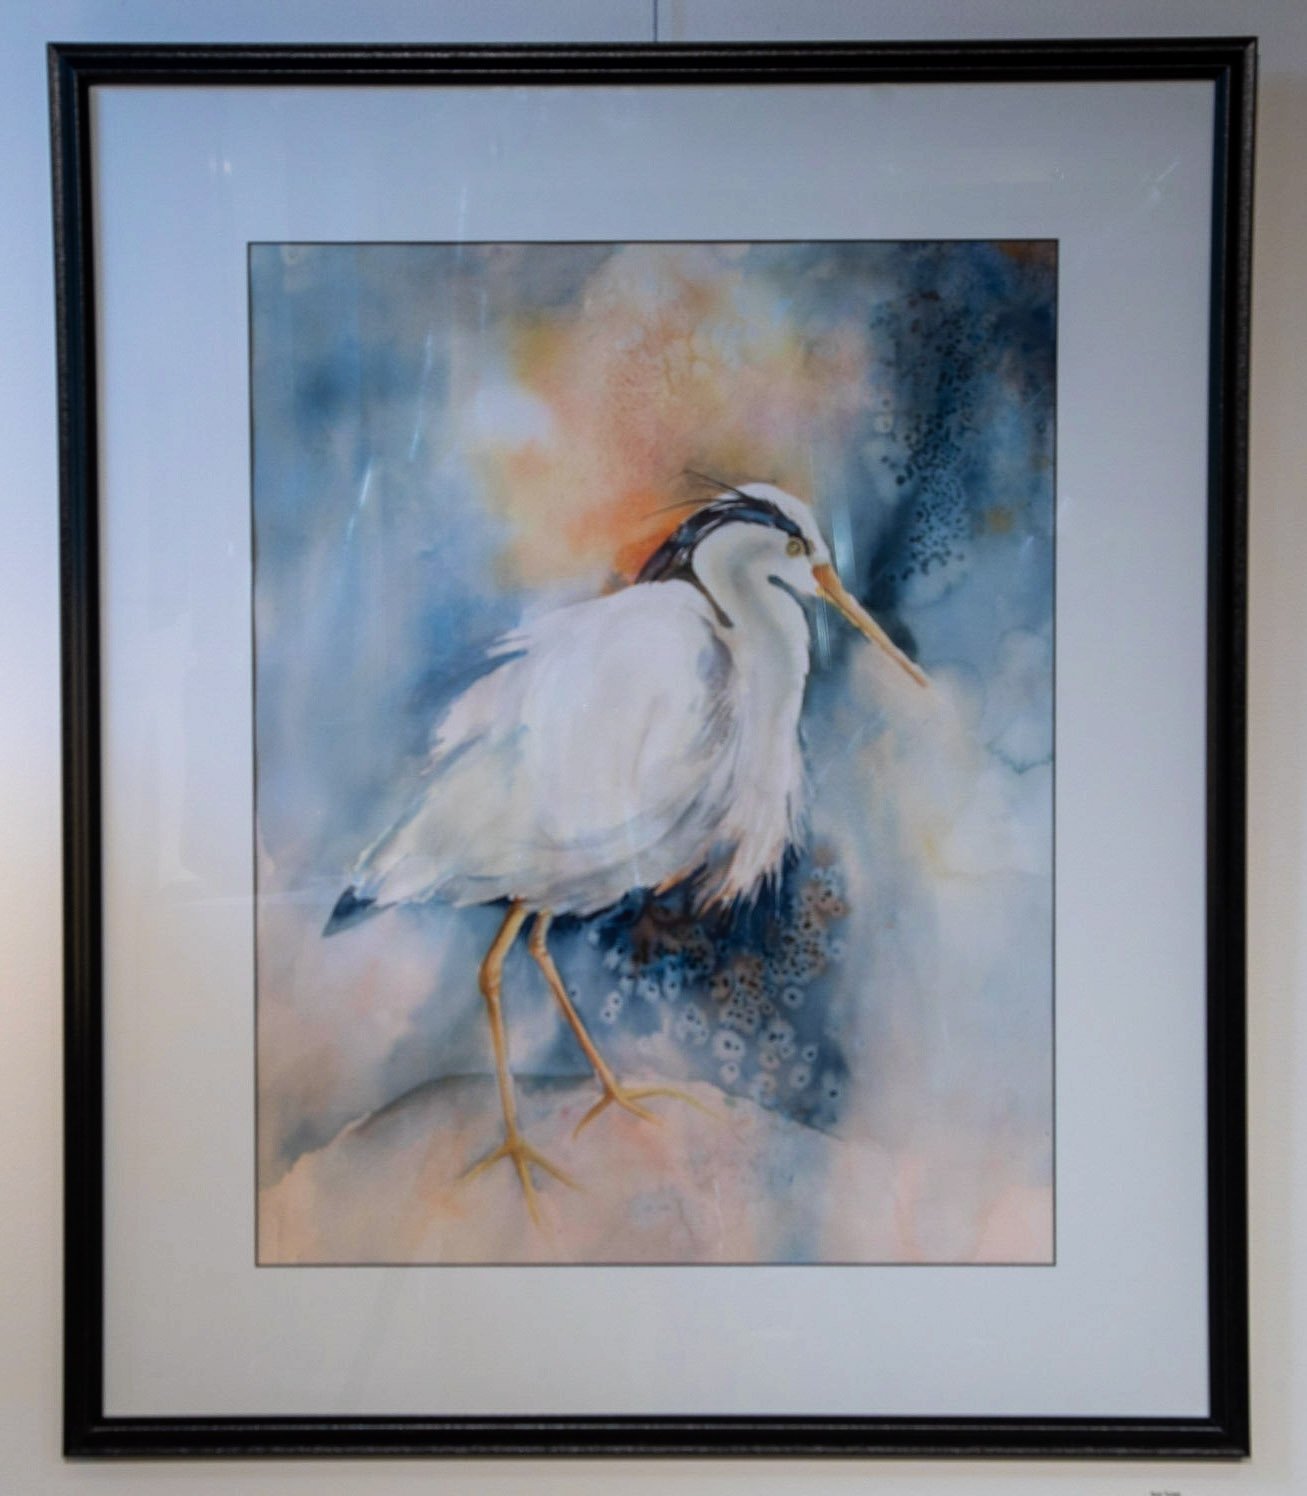 Toni Tyree, "Heron," Watercolor